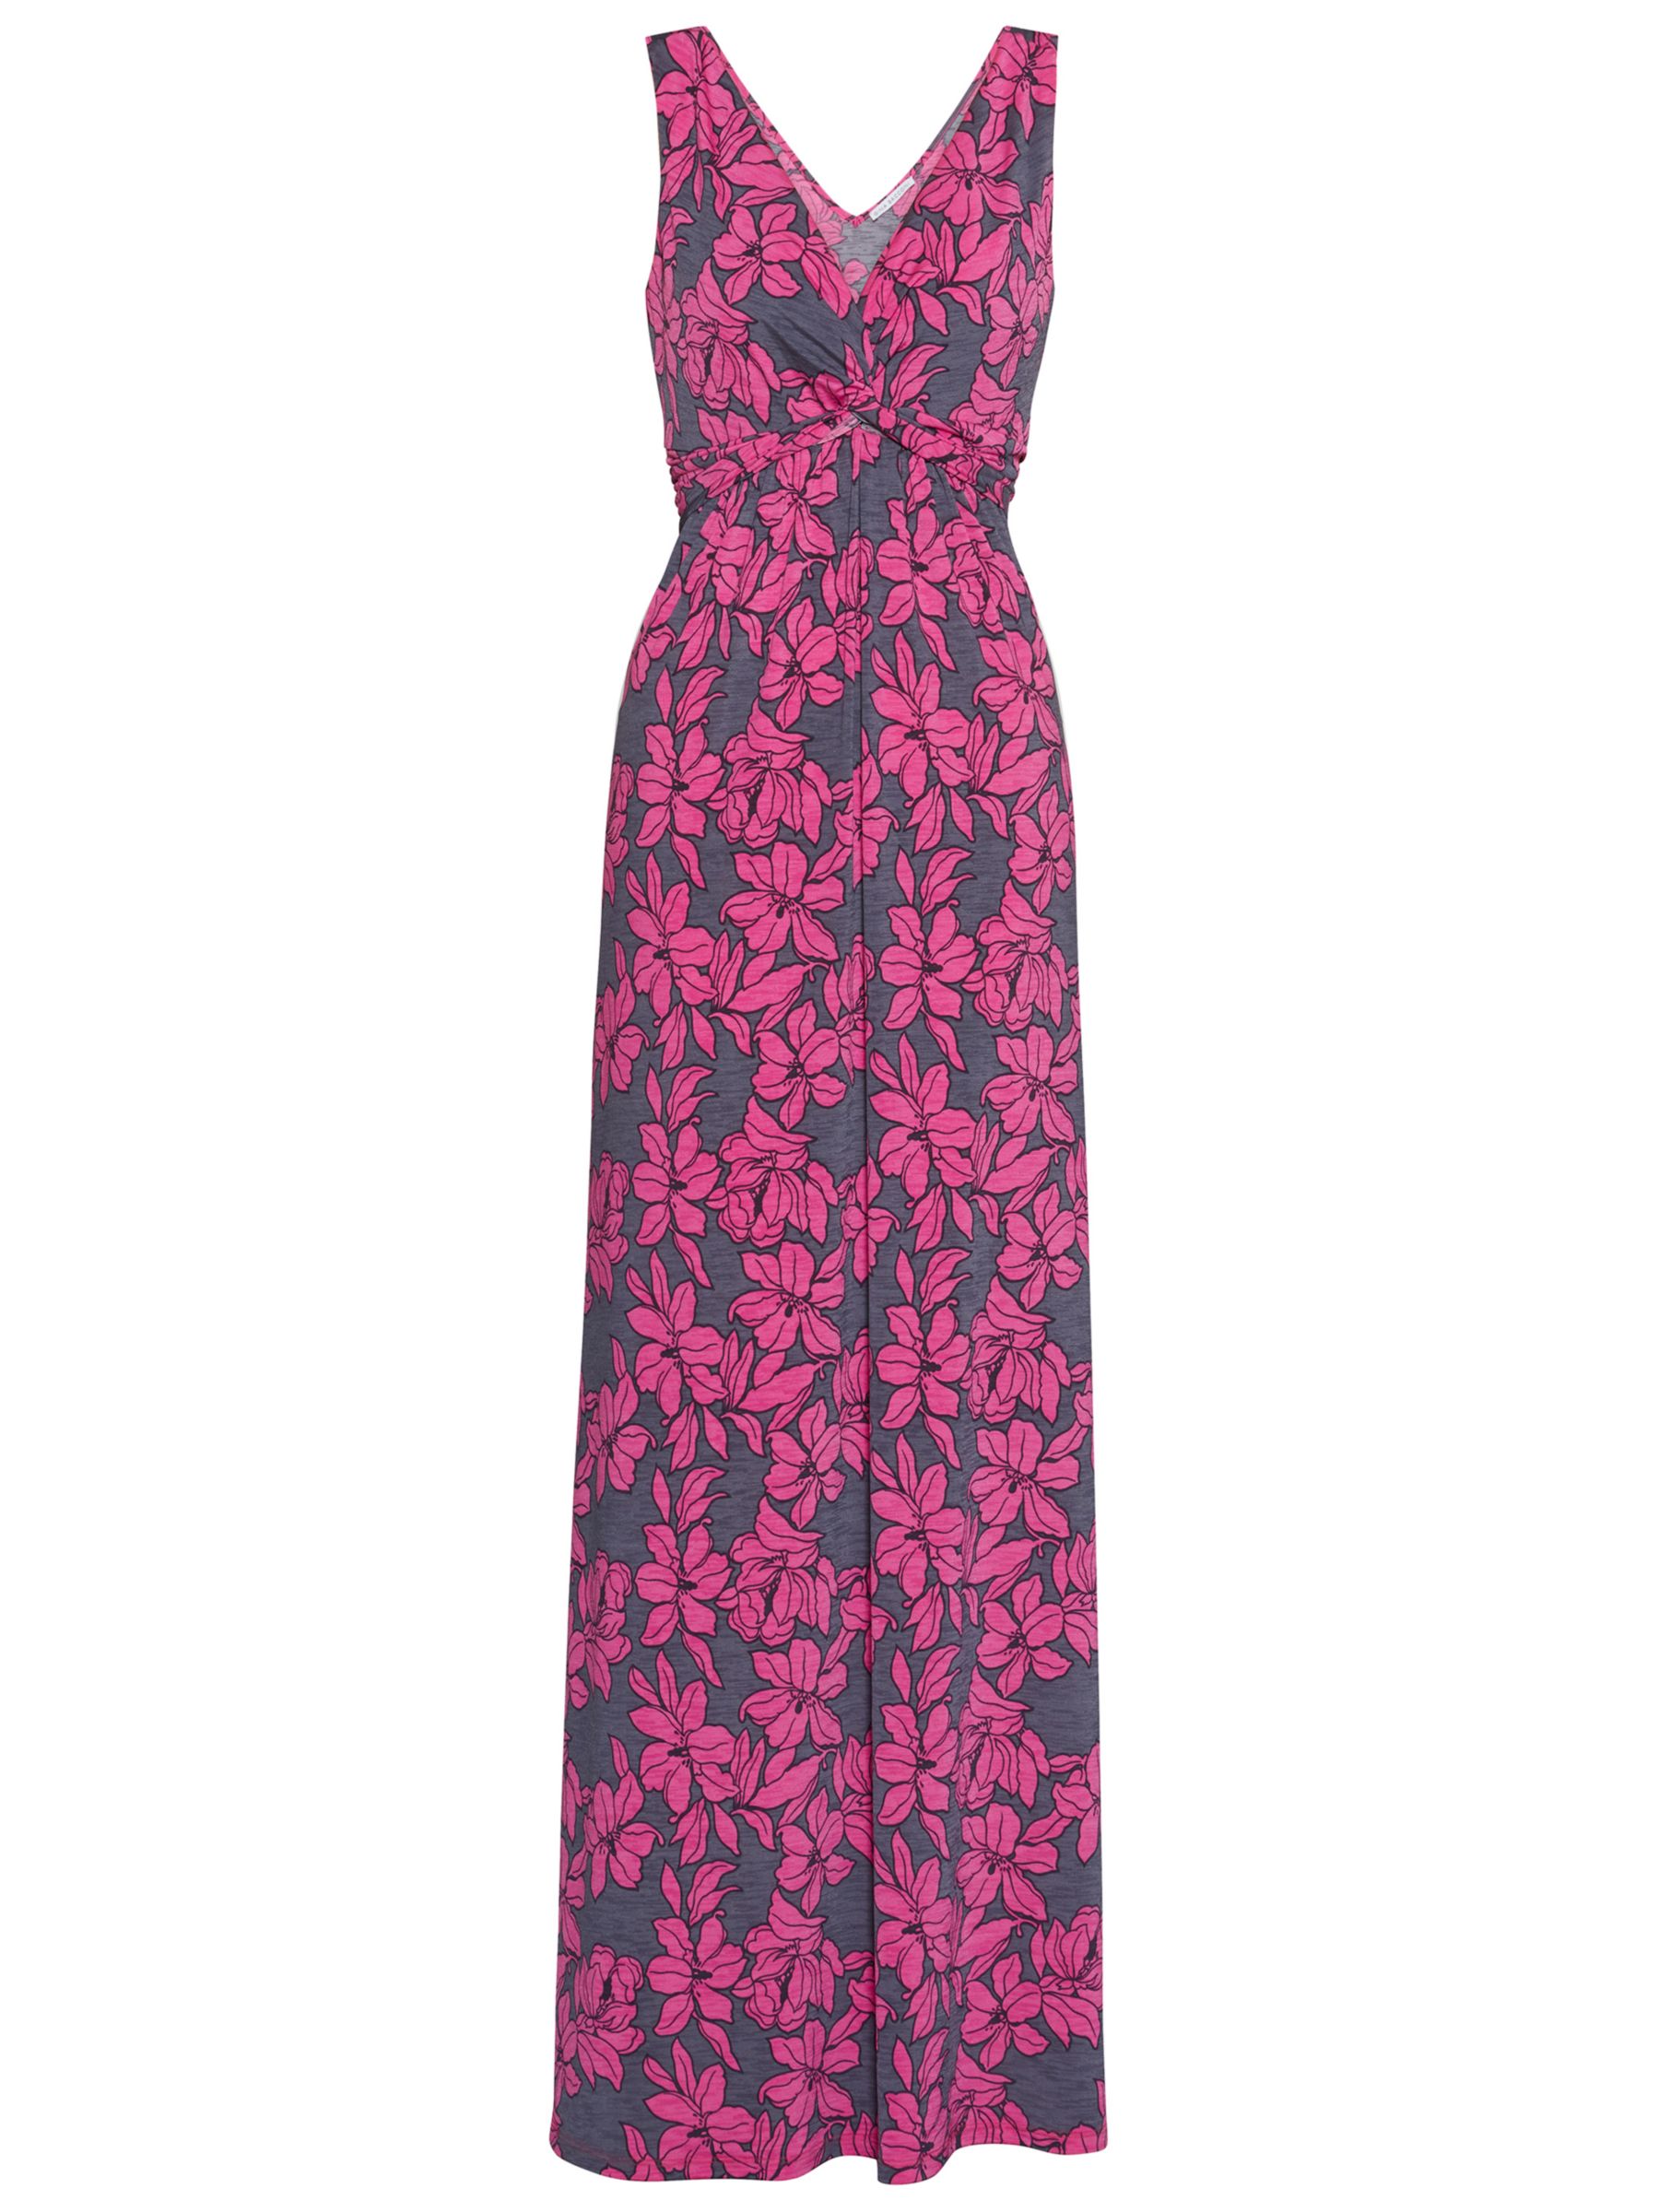 Gina Bacconi Floral Print Jersey Maxi Dress, Grey/Pink